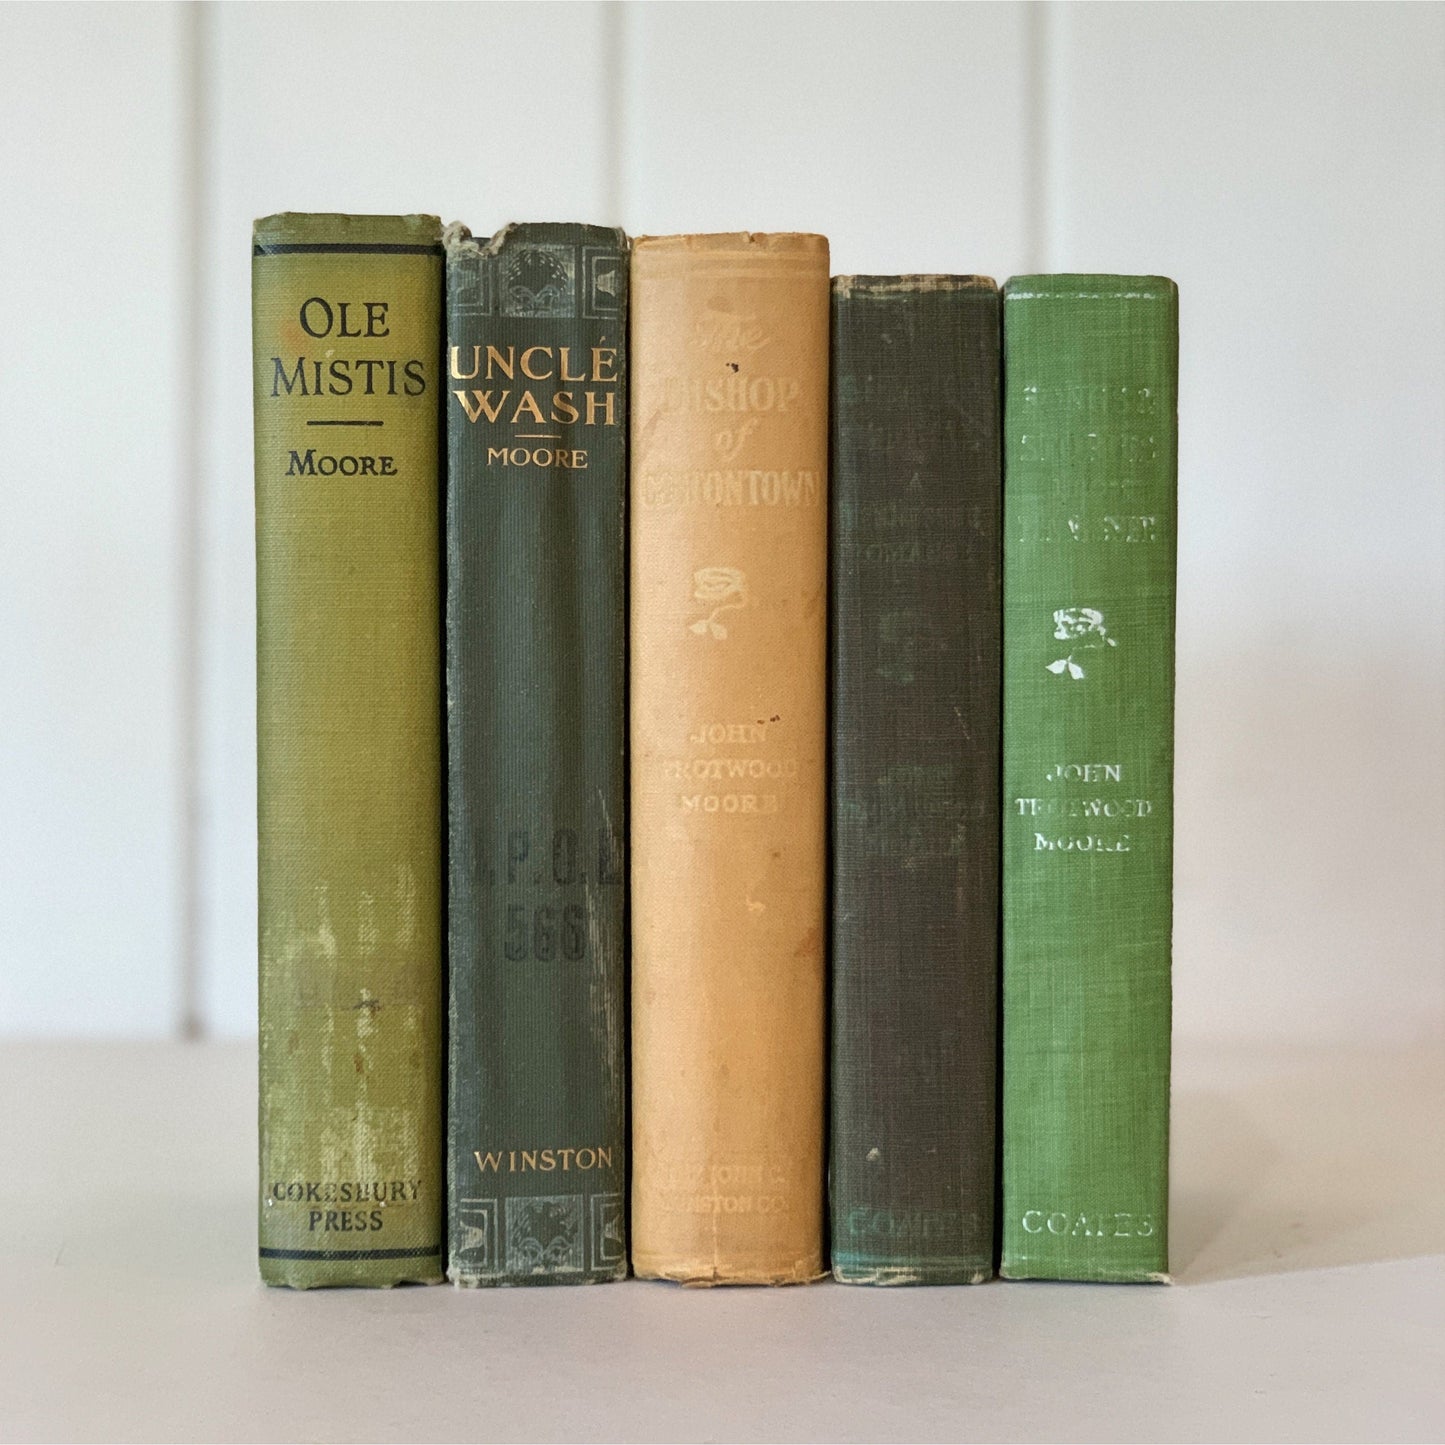 Antique Green John Trotwood Moore Novel Bundle, Books for Display, Farmhouse Bookshelf Decor,